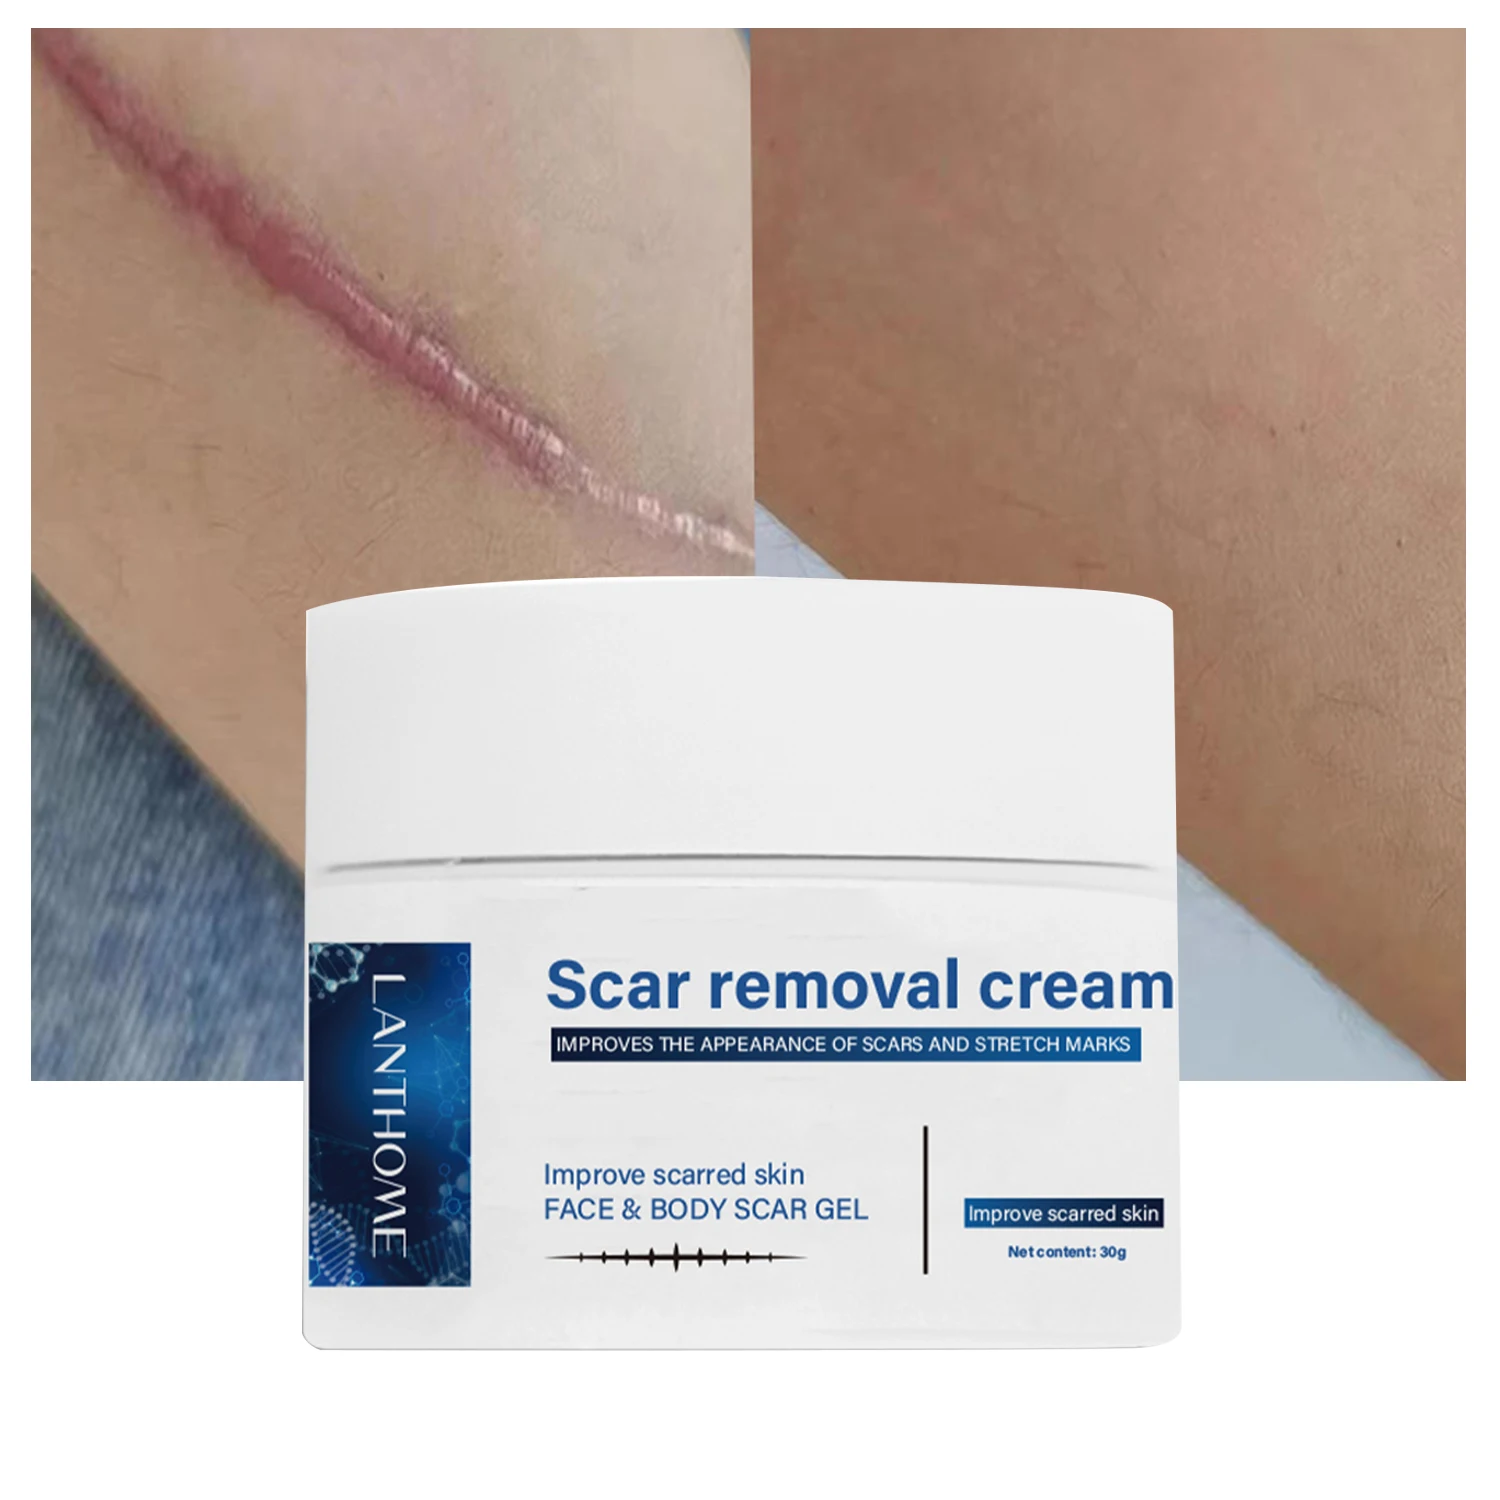 

Scar Removal Cream Repair Pock Mark Burn Surgical Scar Cesarean Stretch Herbal Treatment Gel Whitening Burn Scald Severe Scars